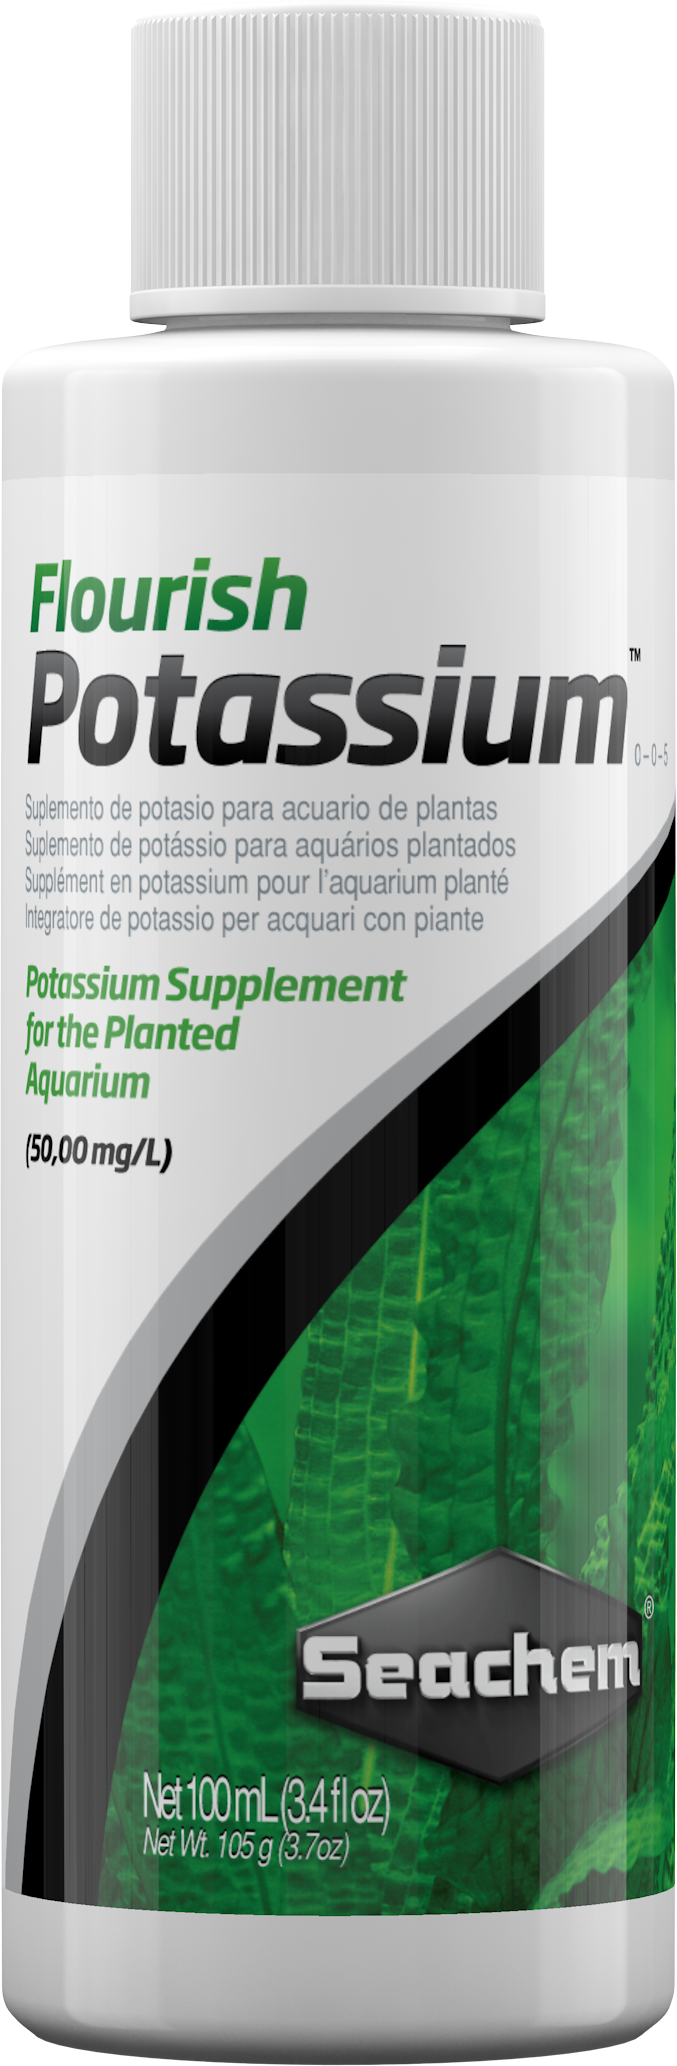 Flourish Potassium